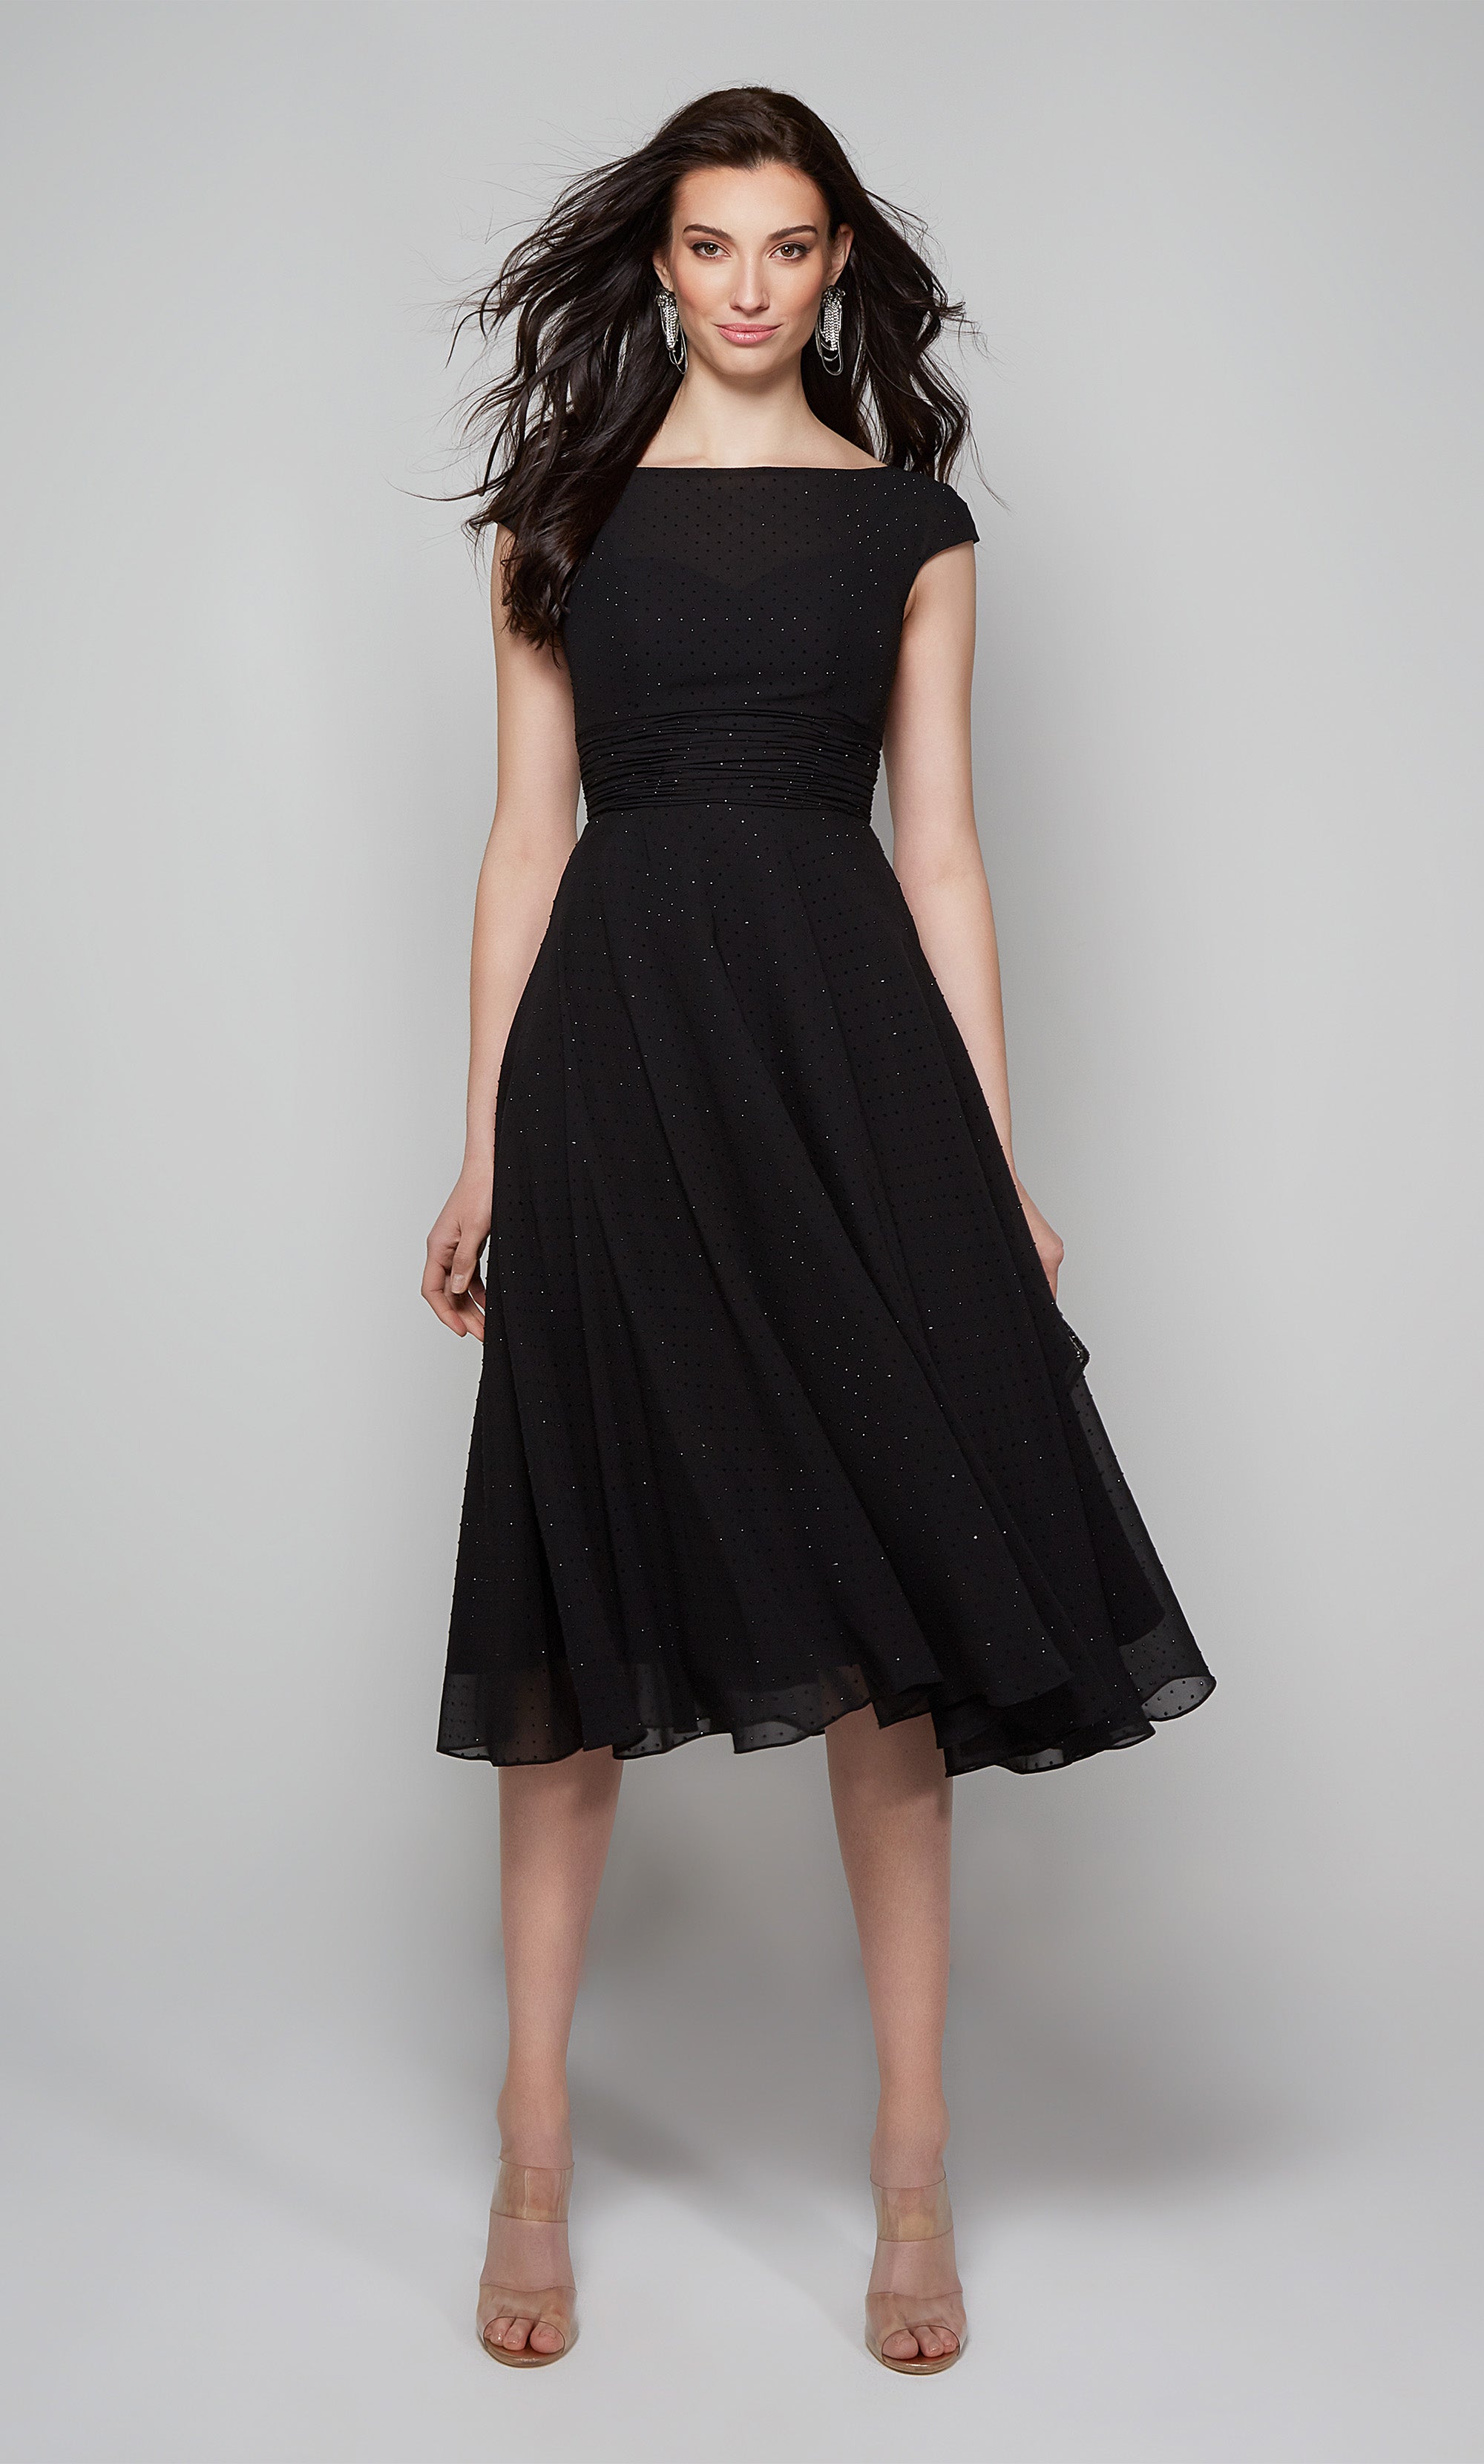 Burgundy Dress - Wrap Midi Dress - Long Sleeve Wrap Dress - Lulus